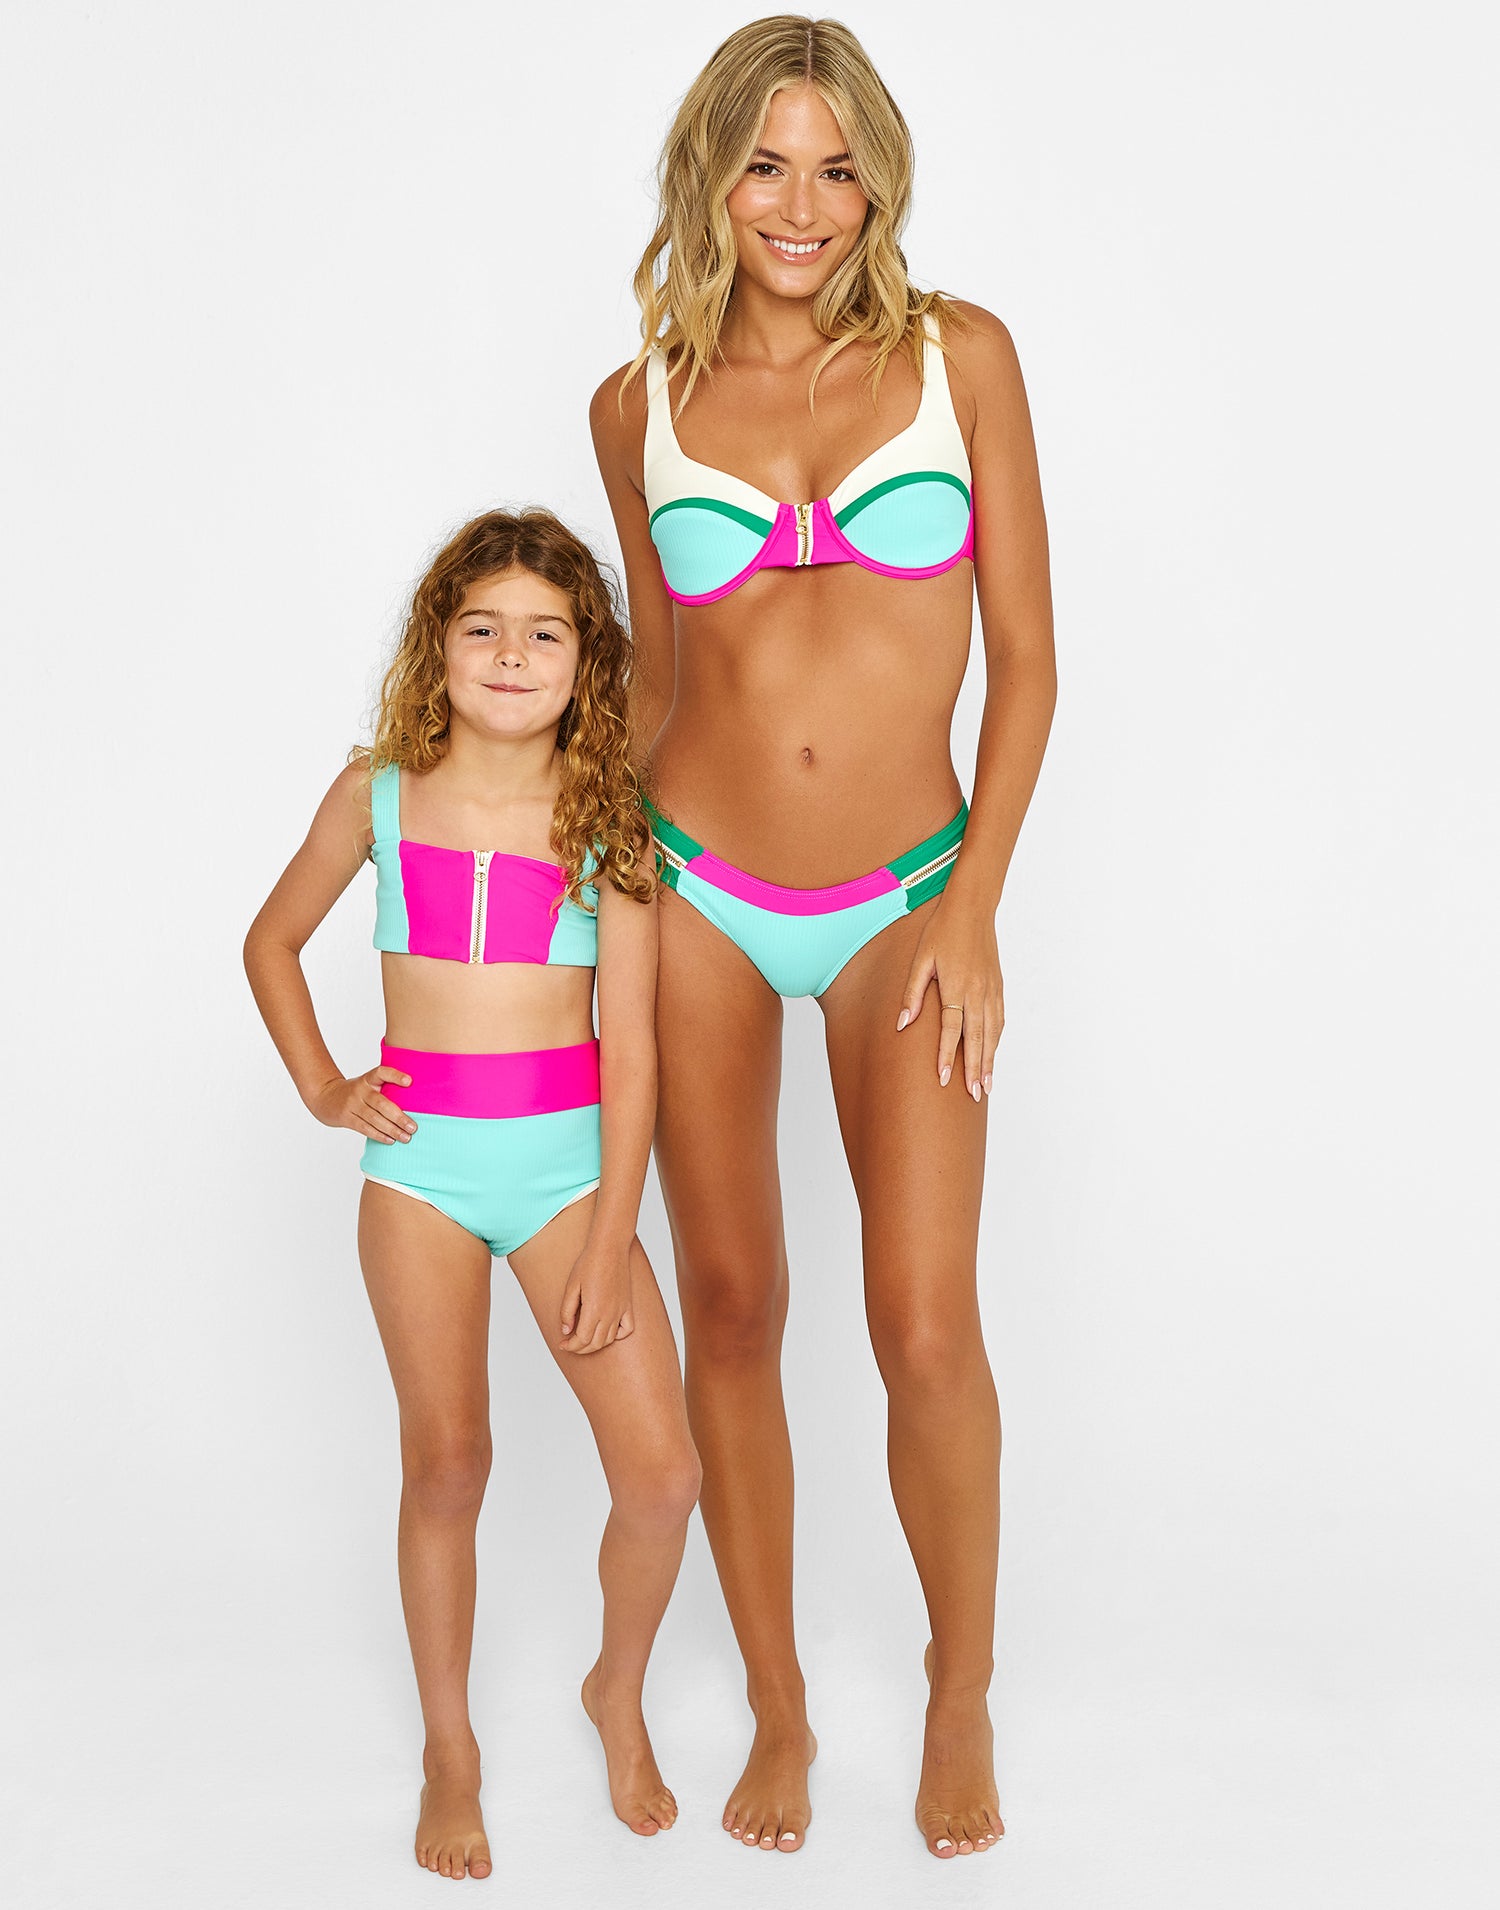 Della Kids Swim Set in Aqua/Pink/Green - Alternate Front View